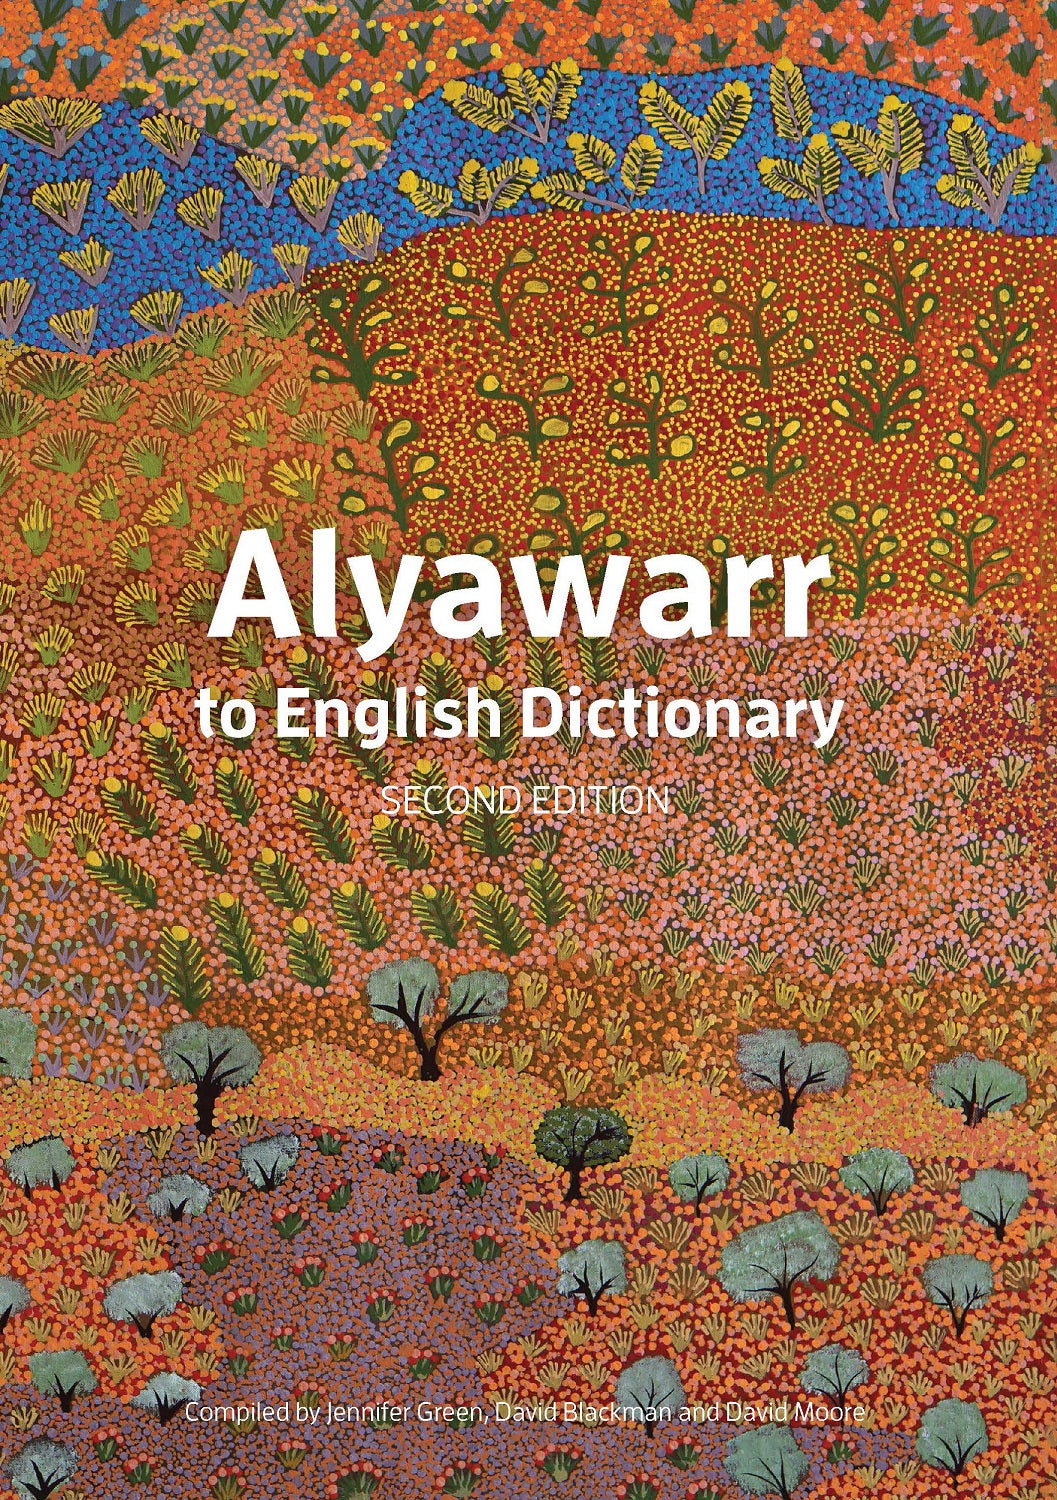 Alyawarr to English Dictionary (2nd Edition) | IAD Press | Australian Aboriginal Publisher & Book Shop